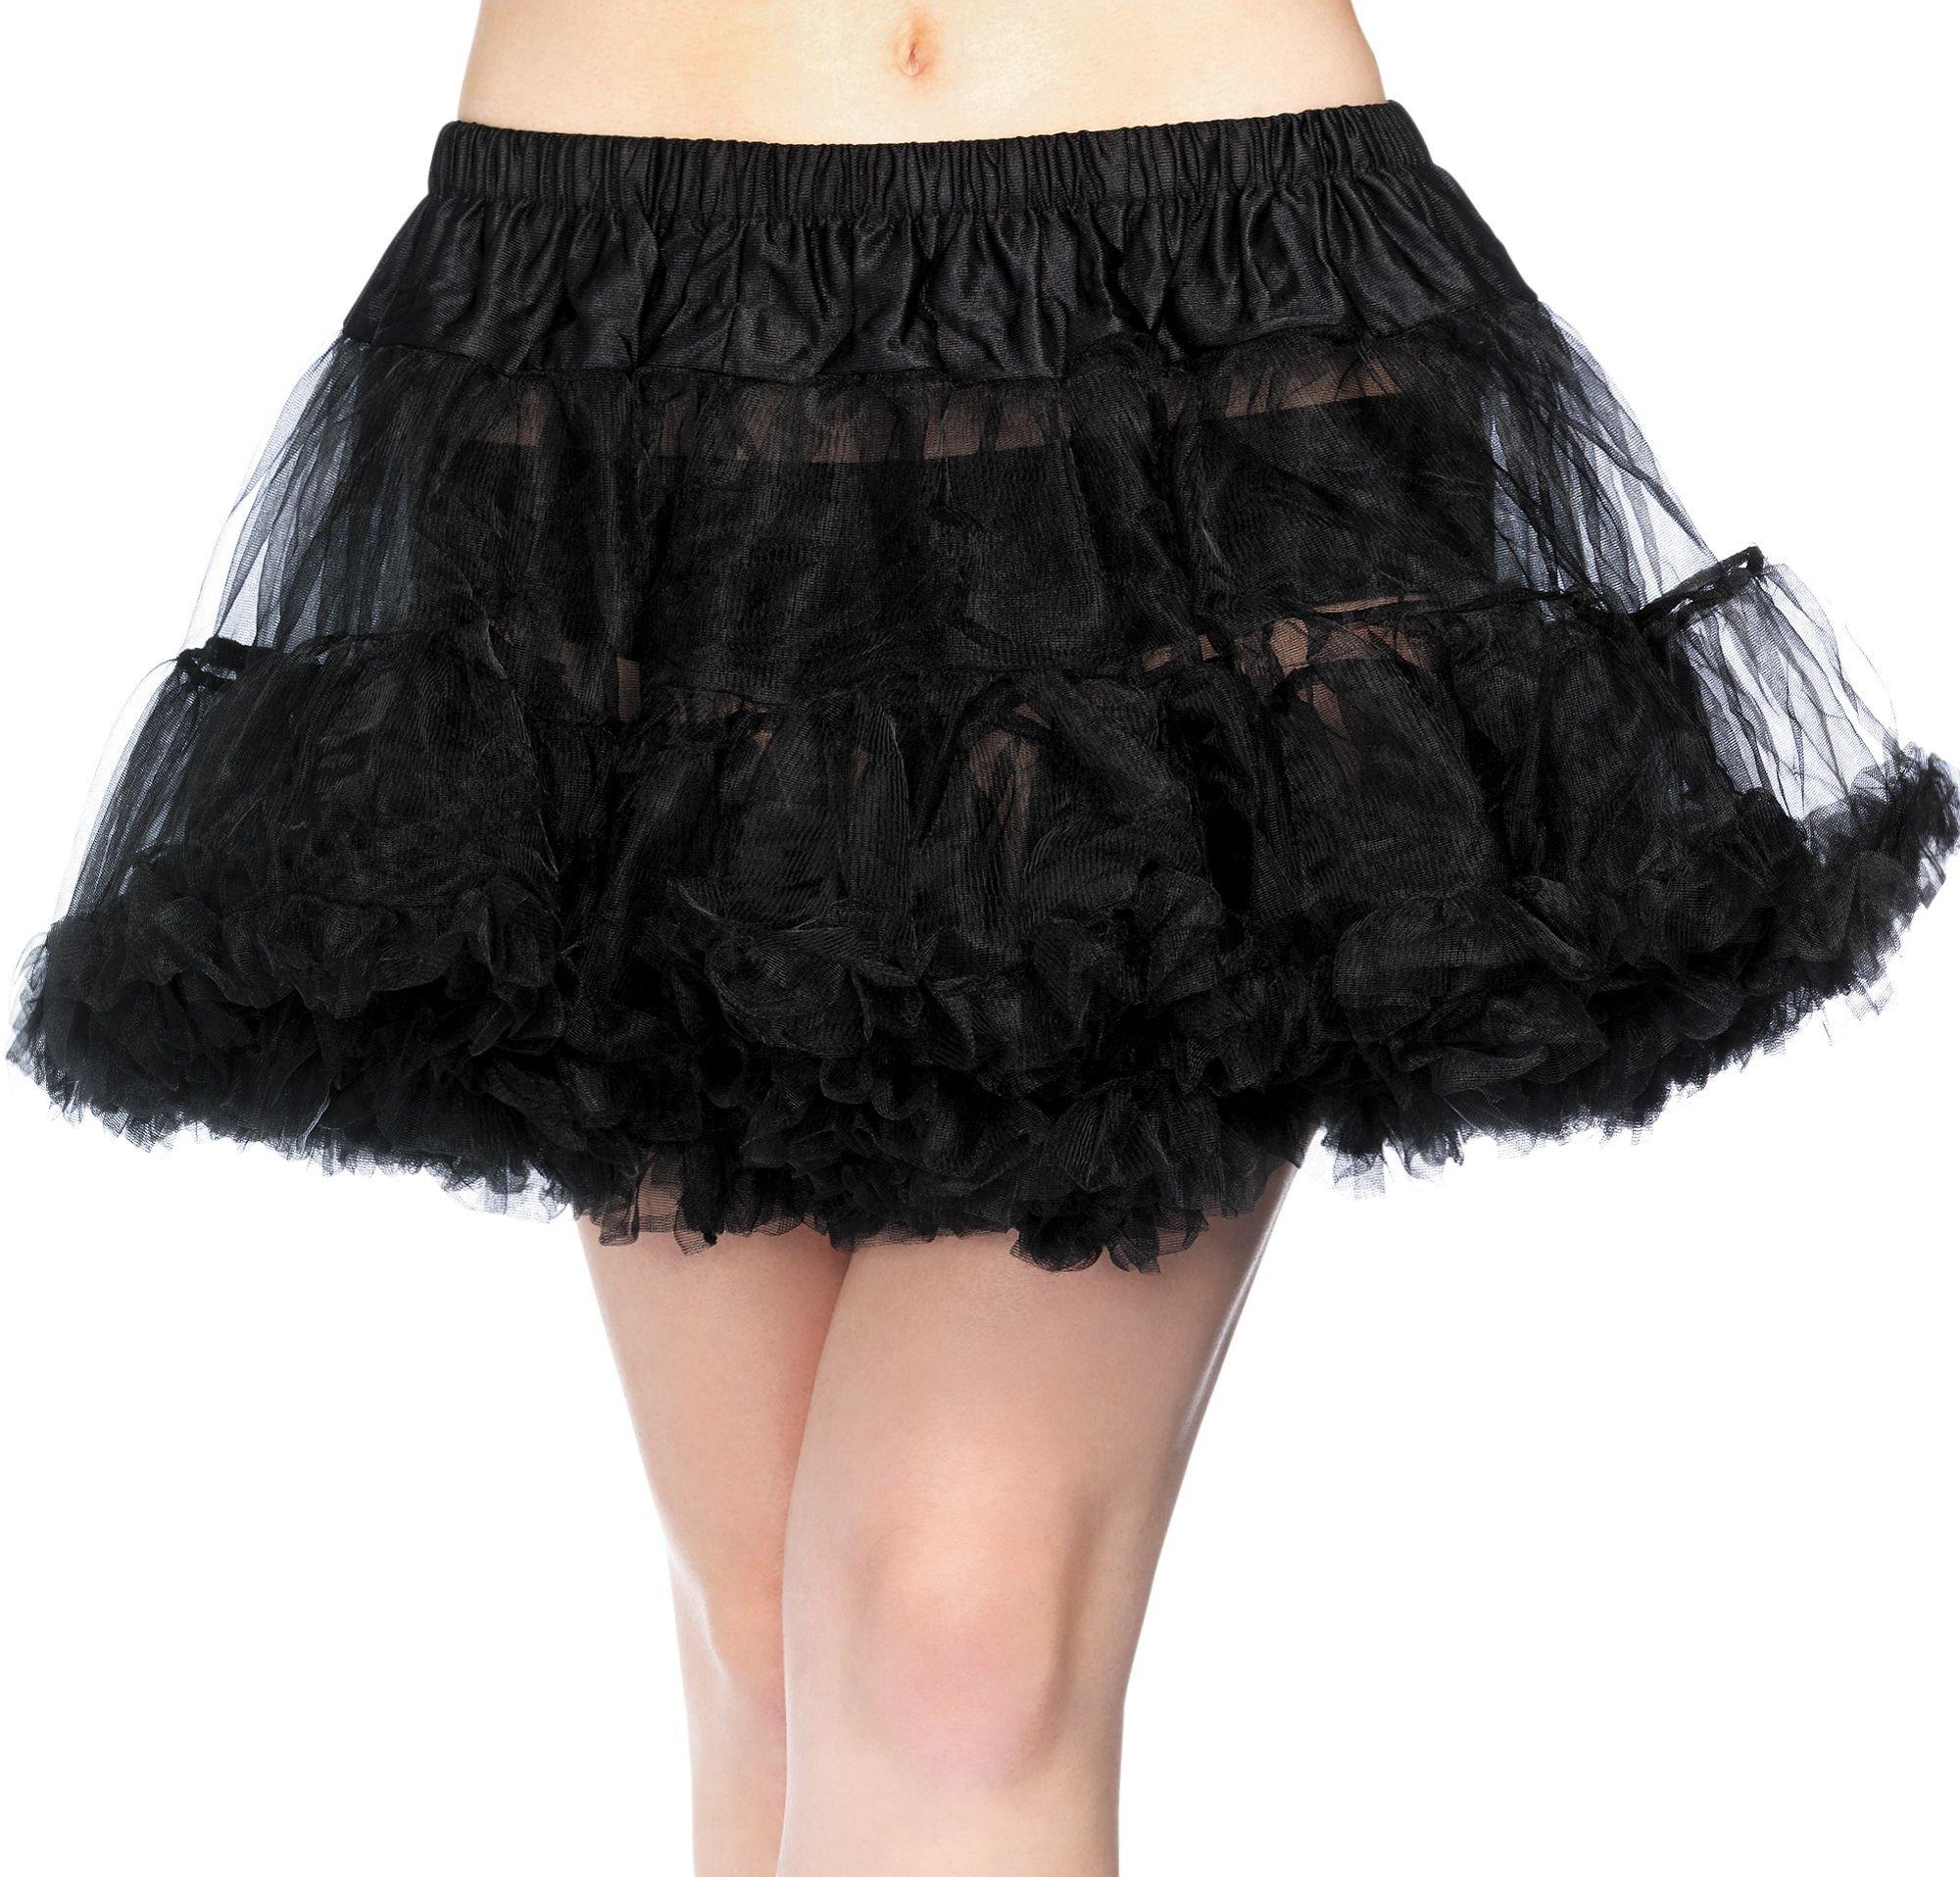 Black Crinoline Plus Size Petticoat for Women | Party City